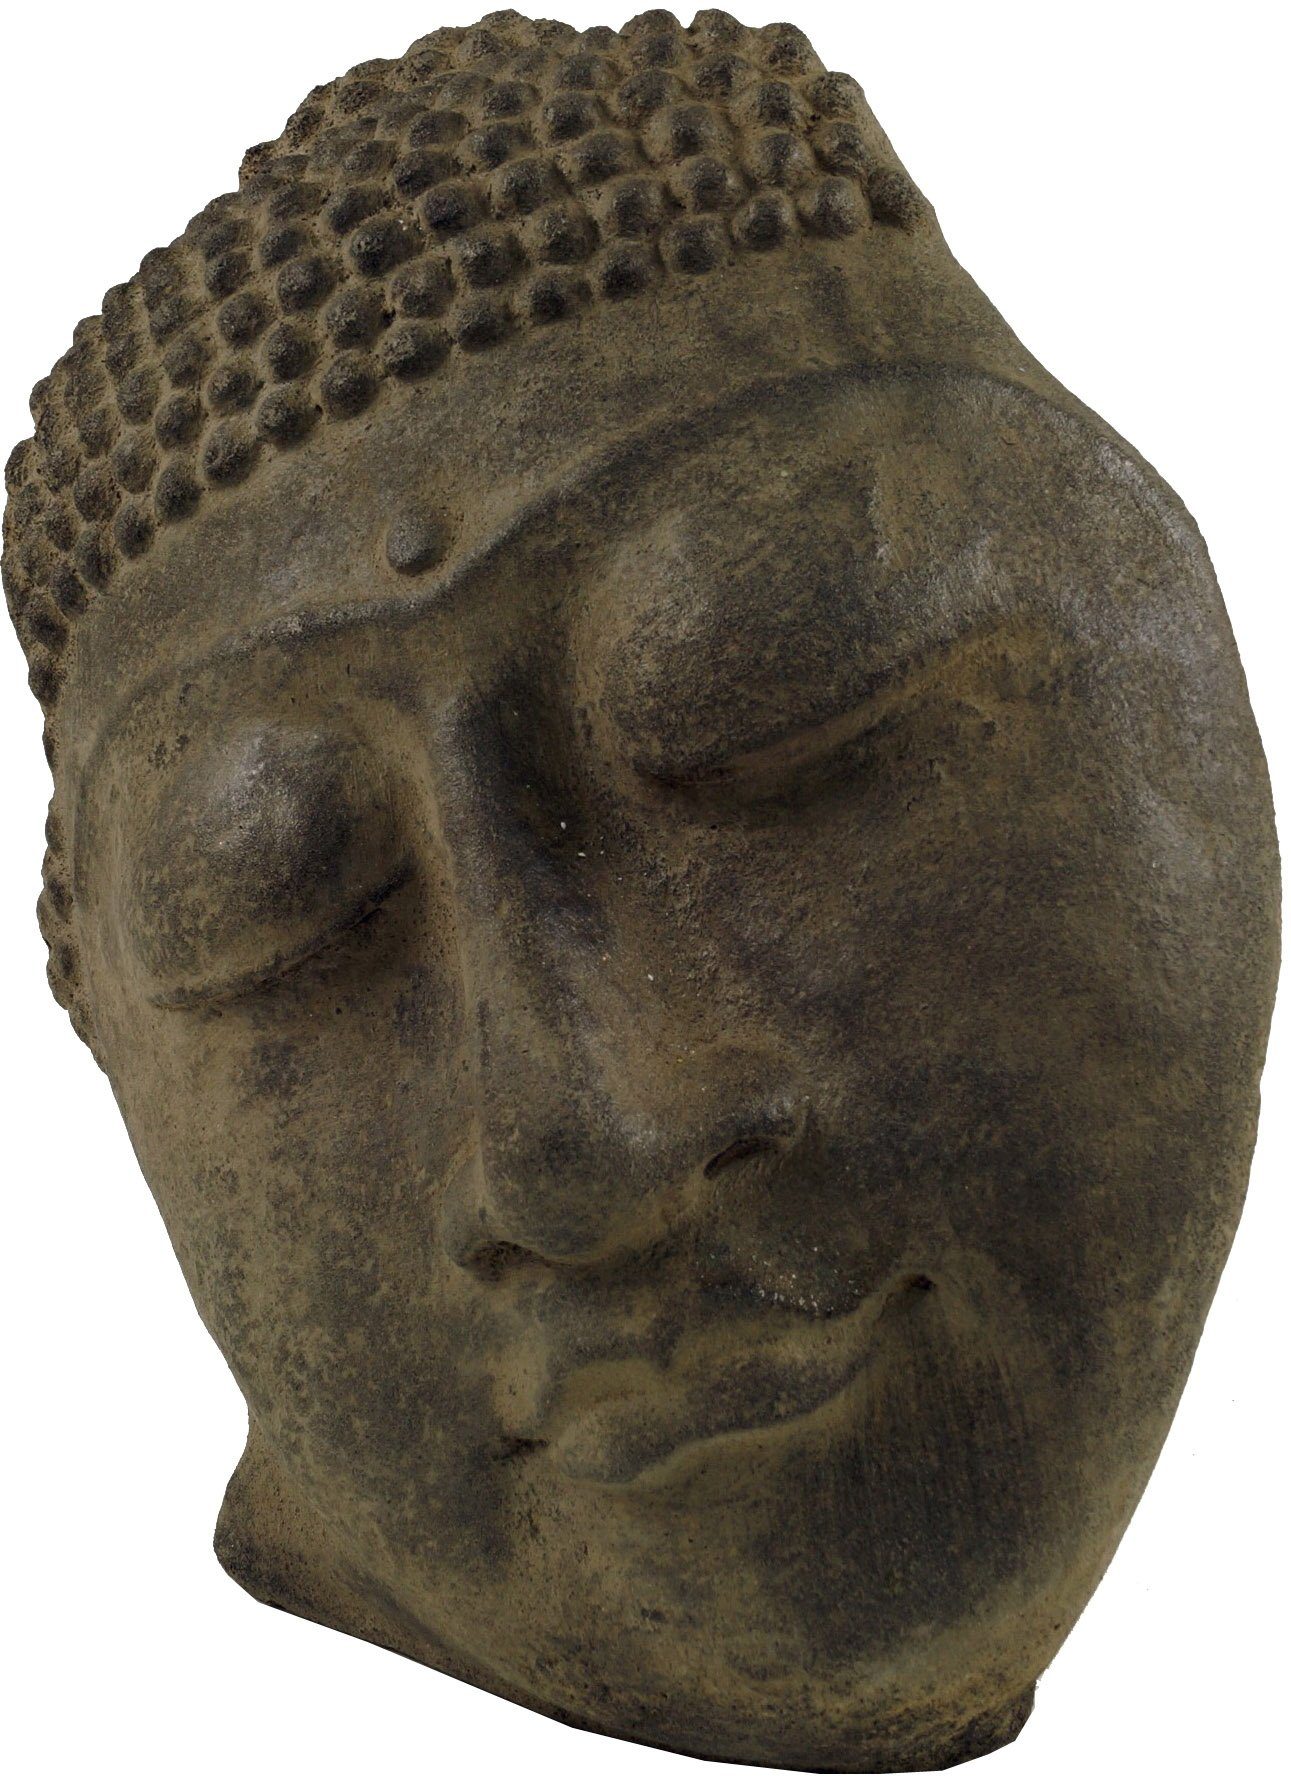 Guru-Shop Buddhafigur Buddhafigur, Buddhamaske aus Stein